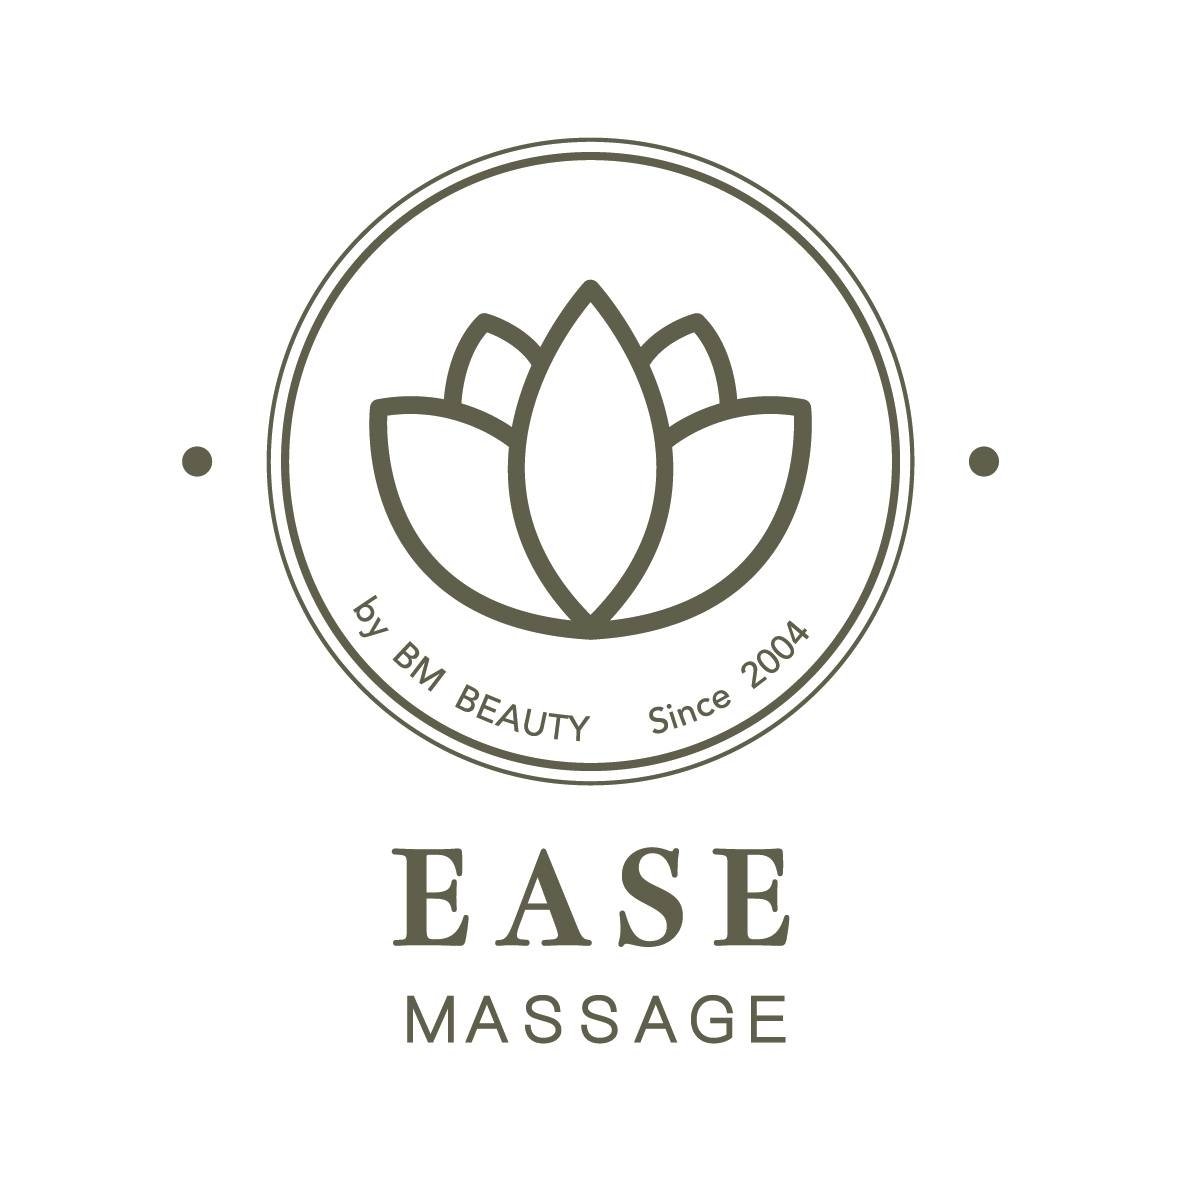 EASE Massage